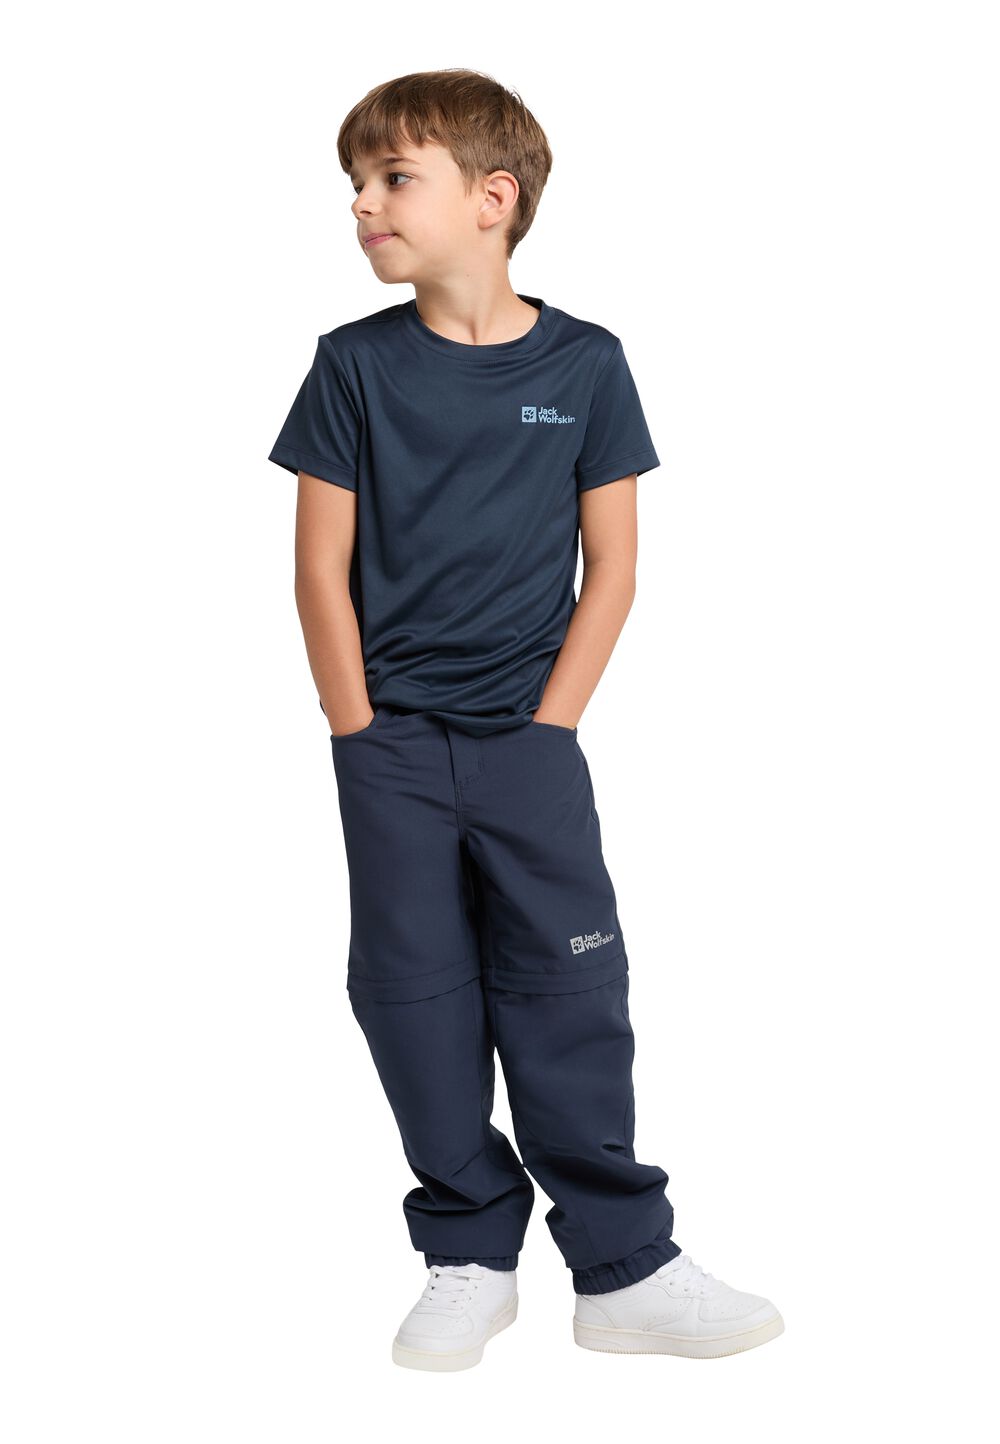 Jack Wolfskin Active Solid T-Shirt Kids Functioneel shirt Kinderen 128 blue night blue